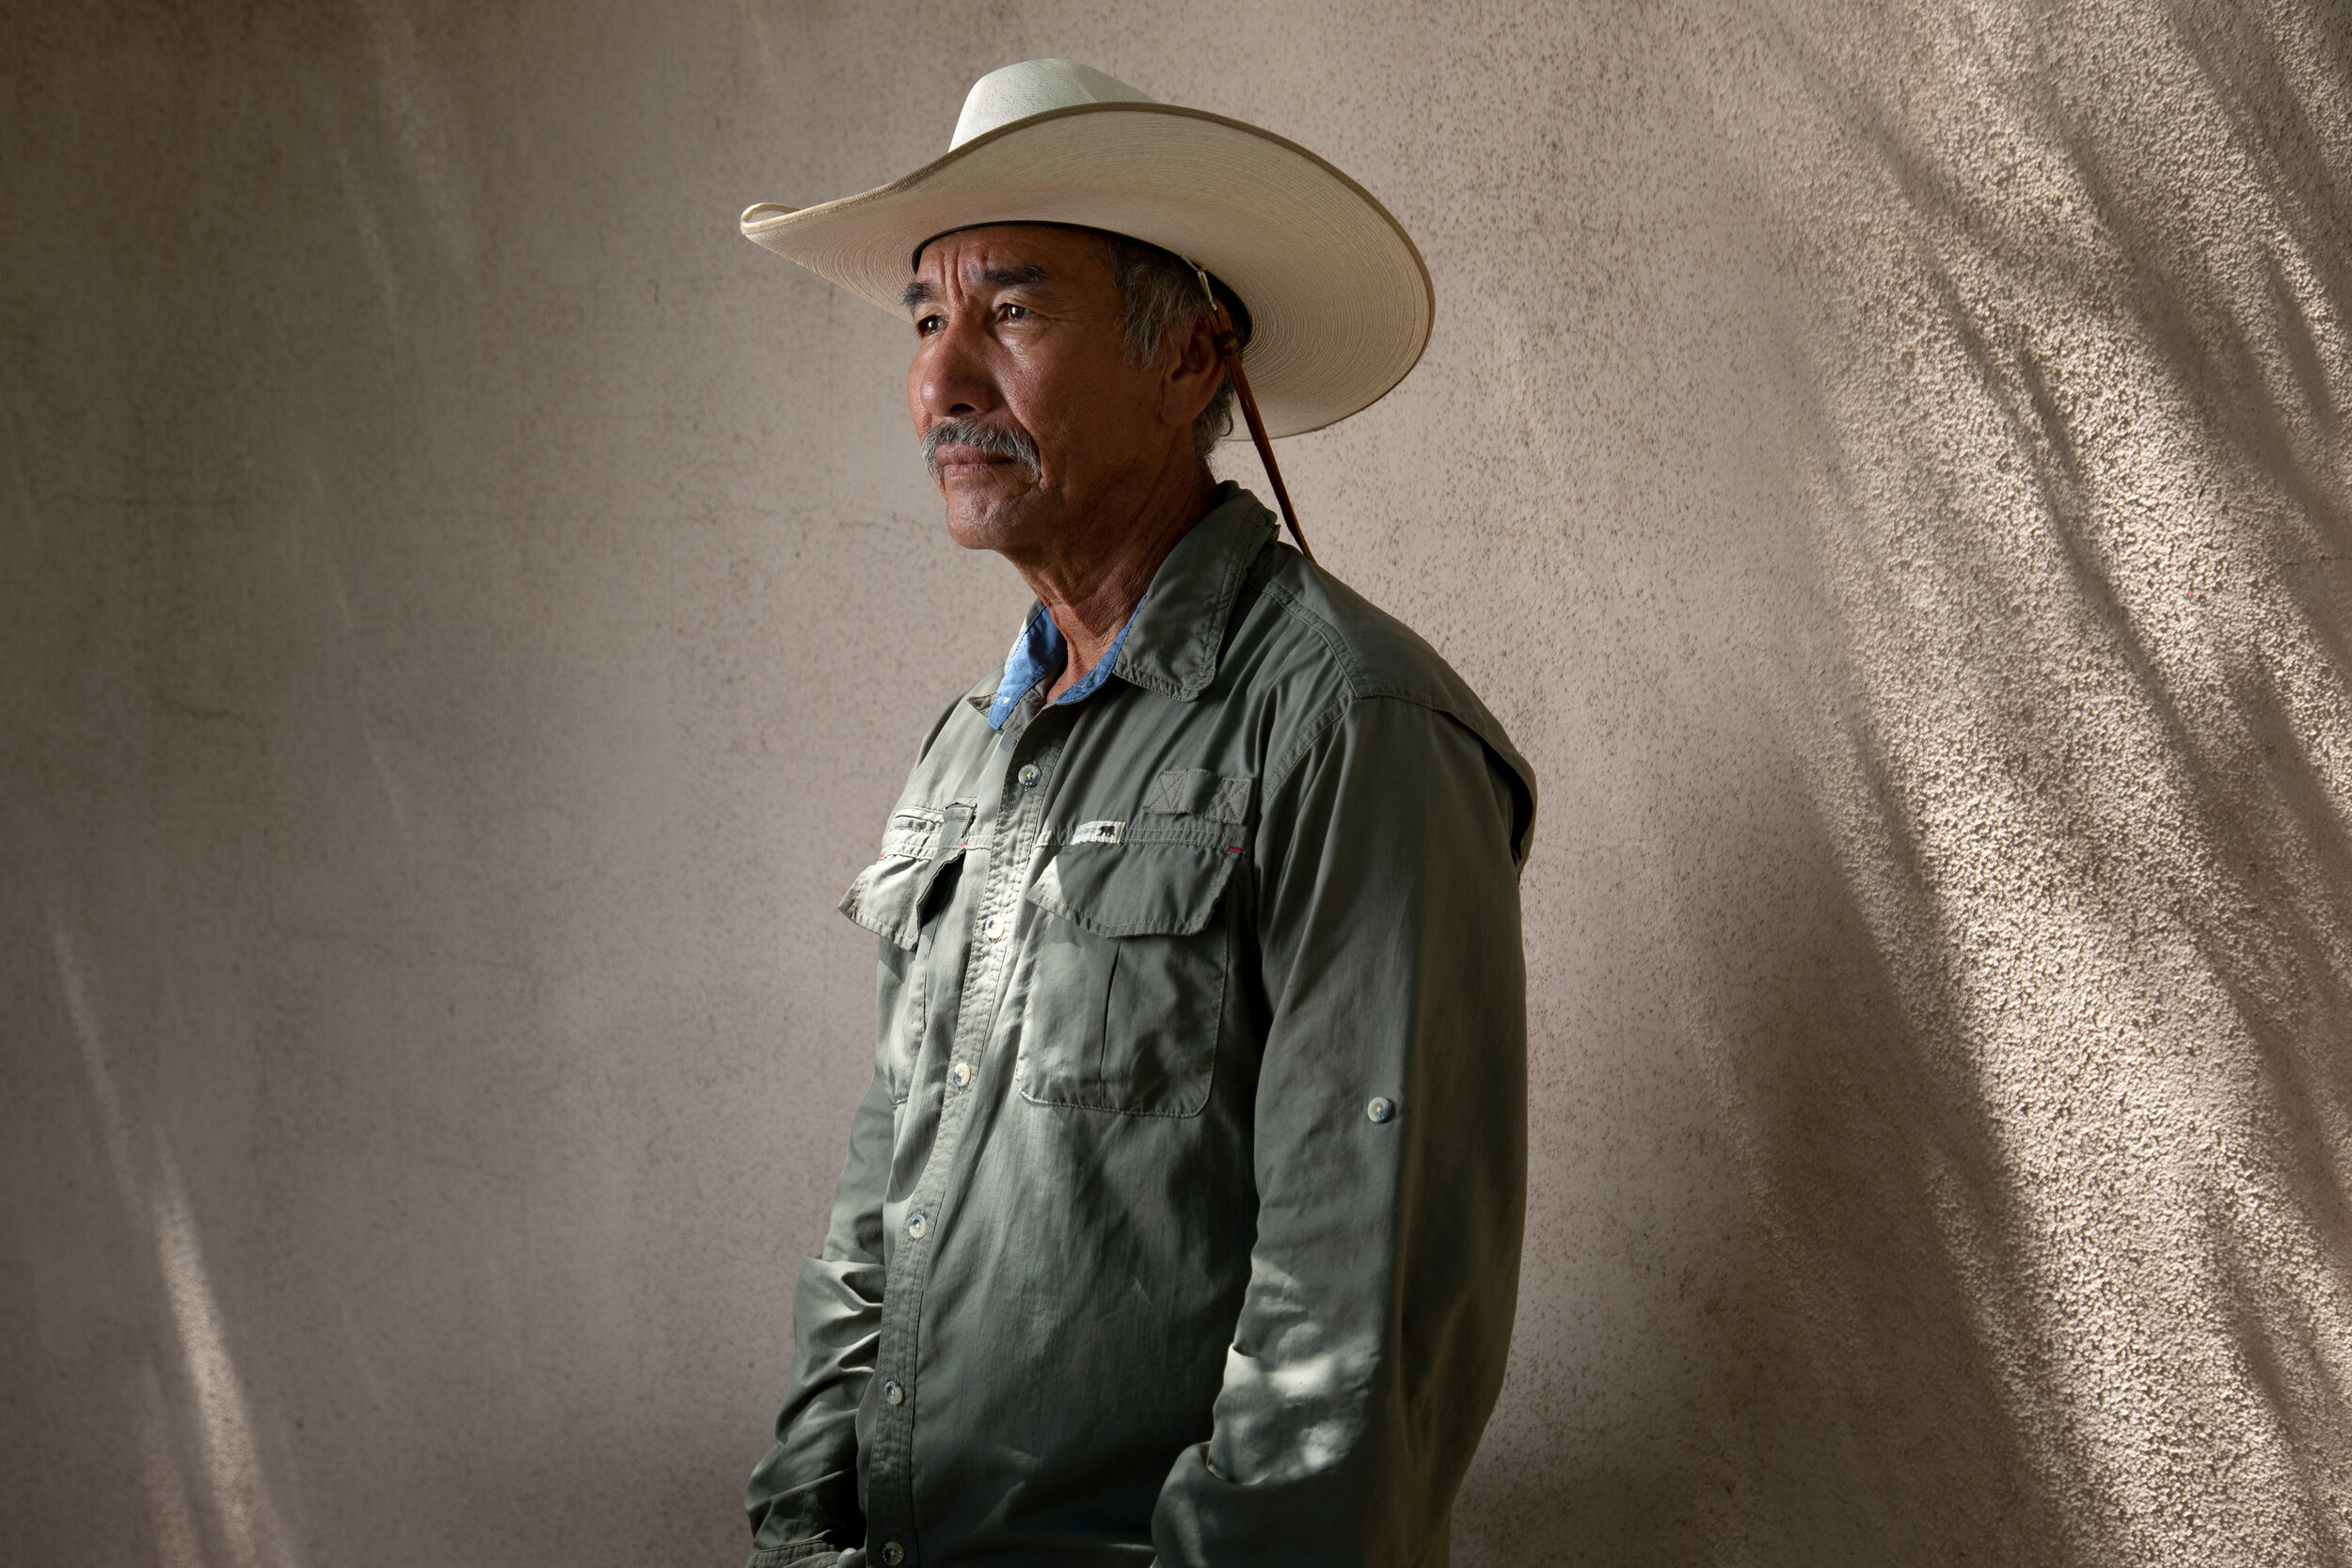  Pedro Ramos poses for a portrait at Kachina Park in Phoenix, Arizona on July 14, 2020. (Photo by Courtney Pedroza for the Washington Post) 